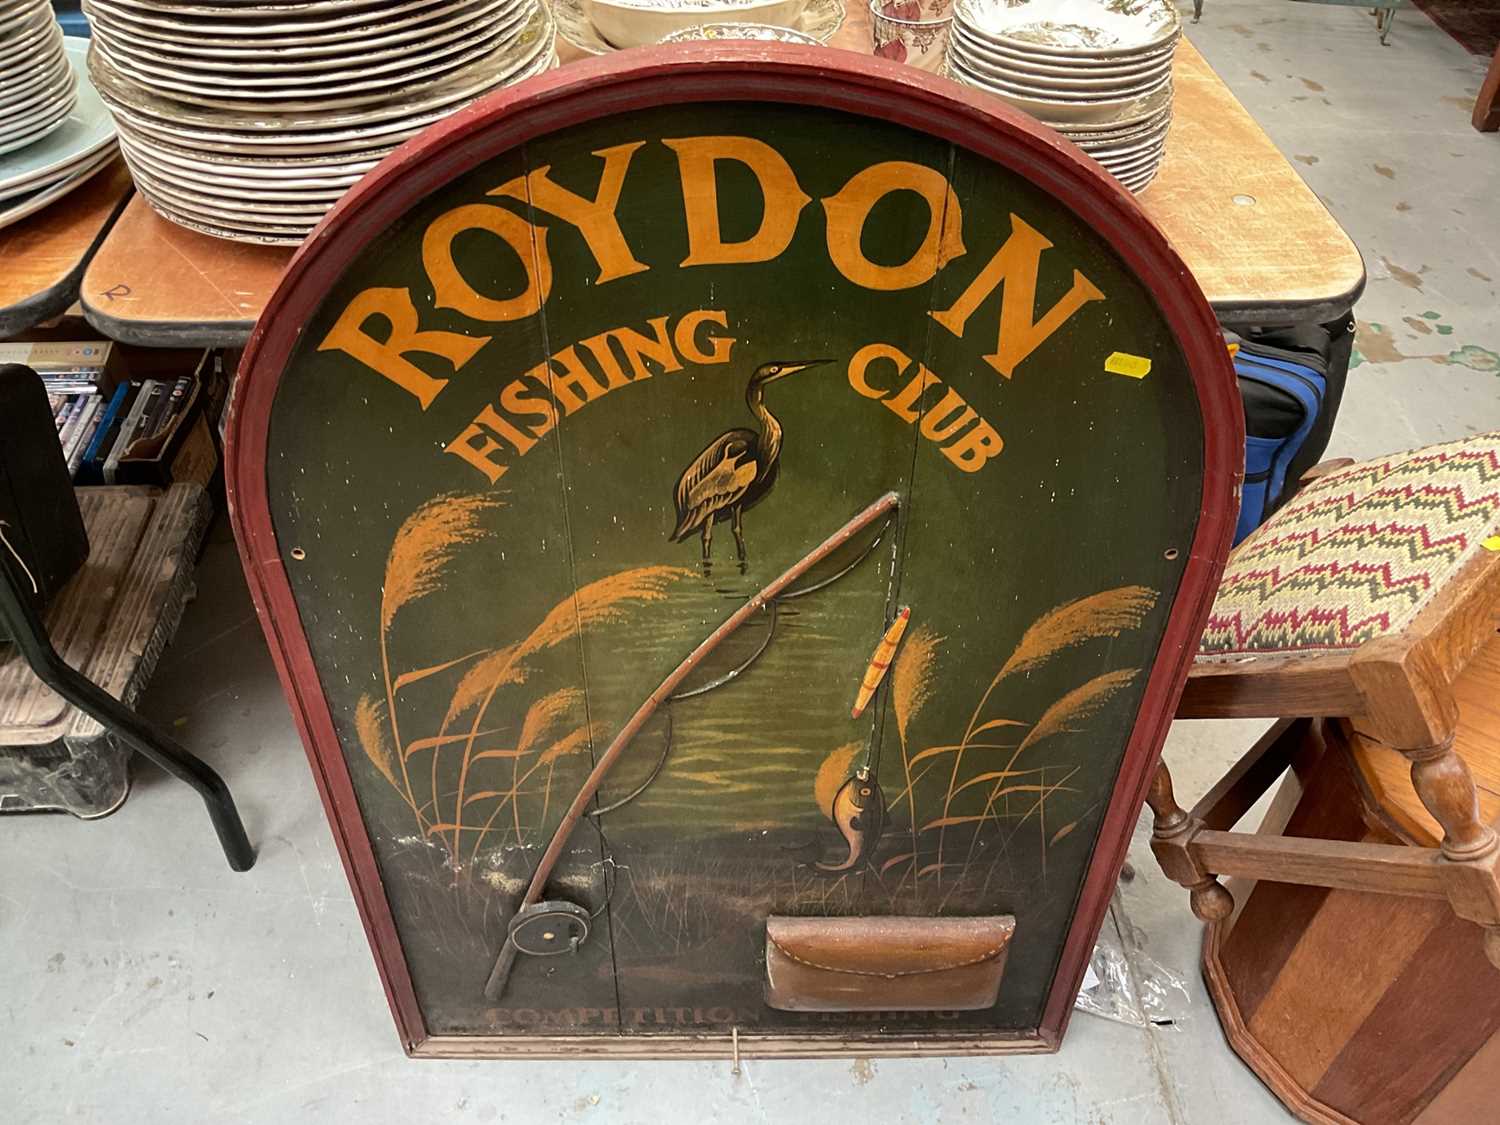 Roydon Fishing Club novelty sign